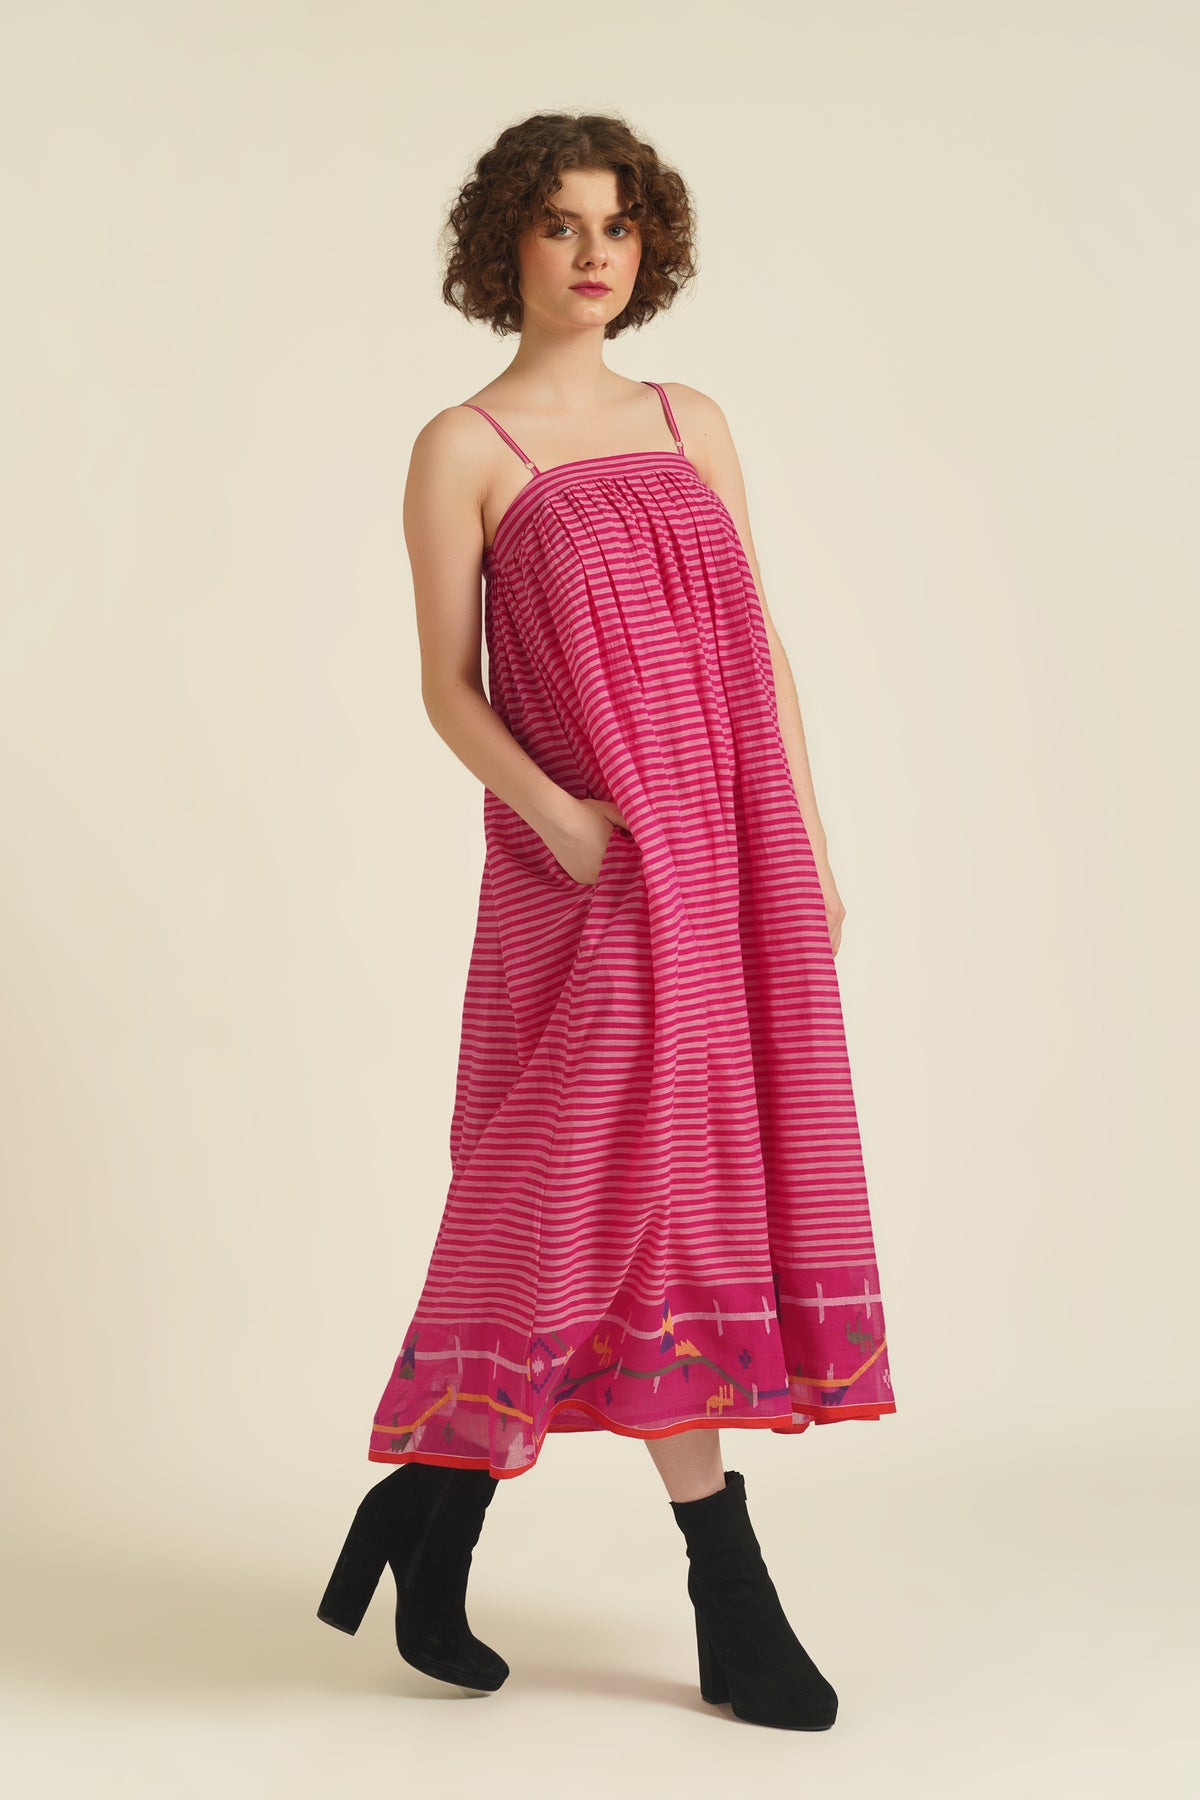 ROYALE XII Pink Dress